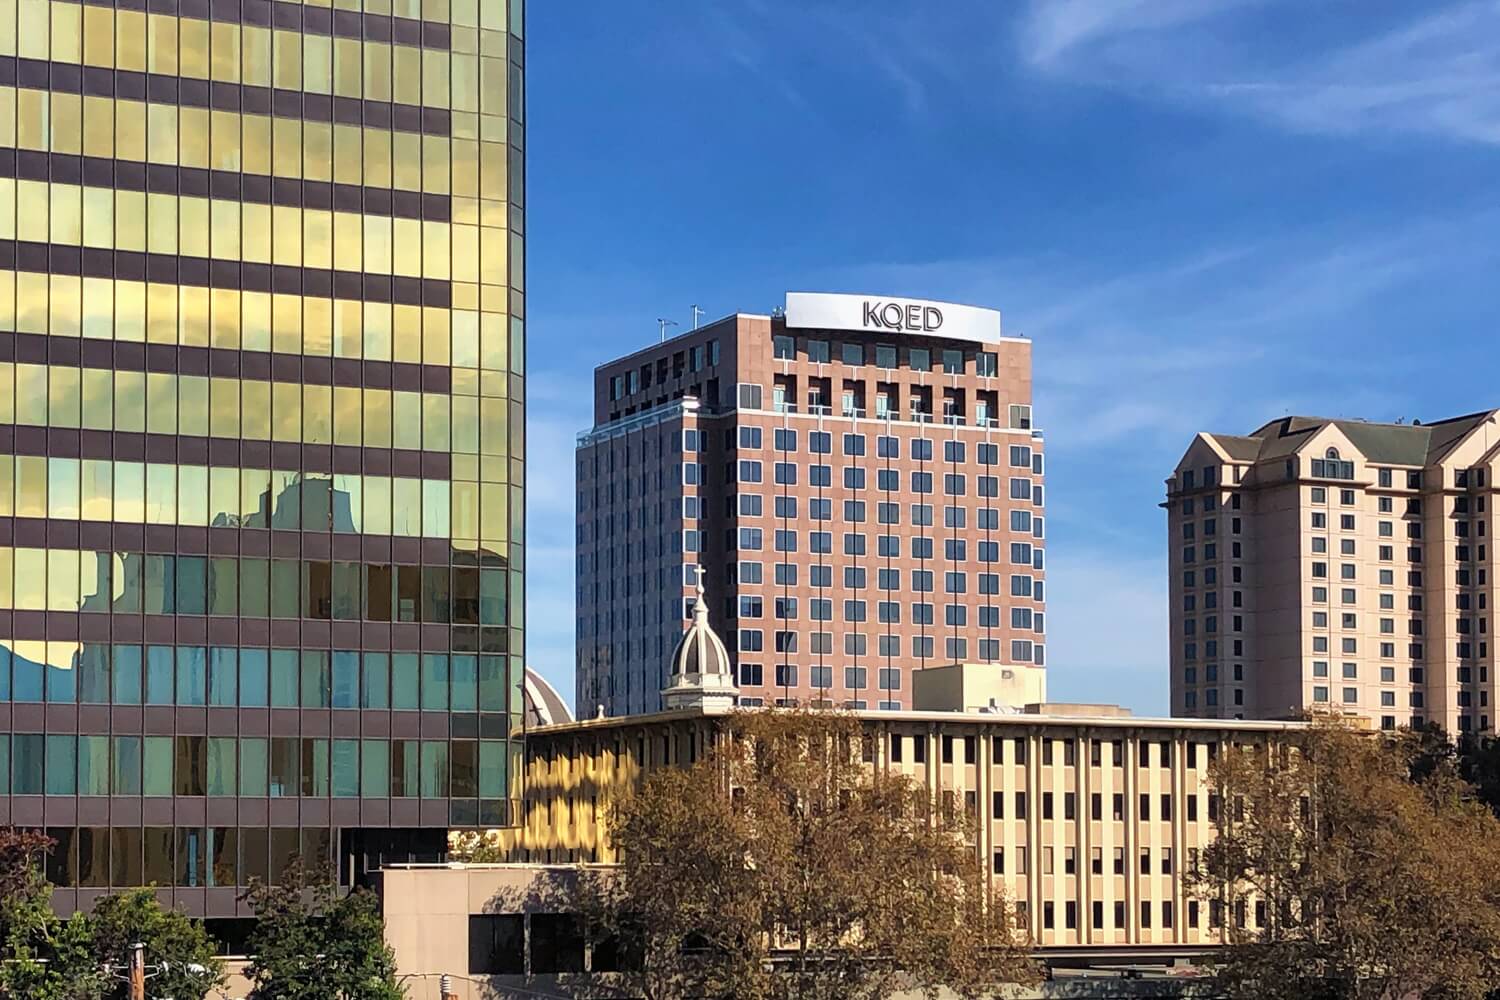 San Jose, California, USA - May 21, 2018: 's headquarters